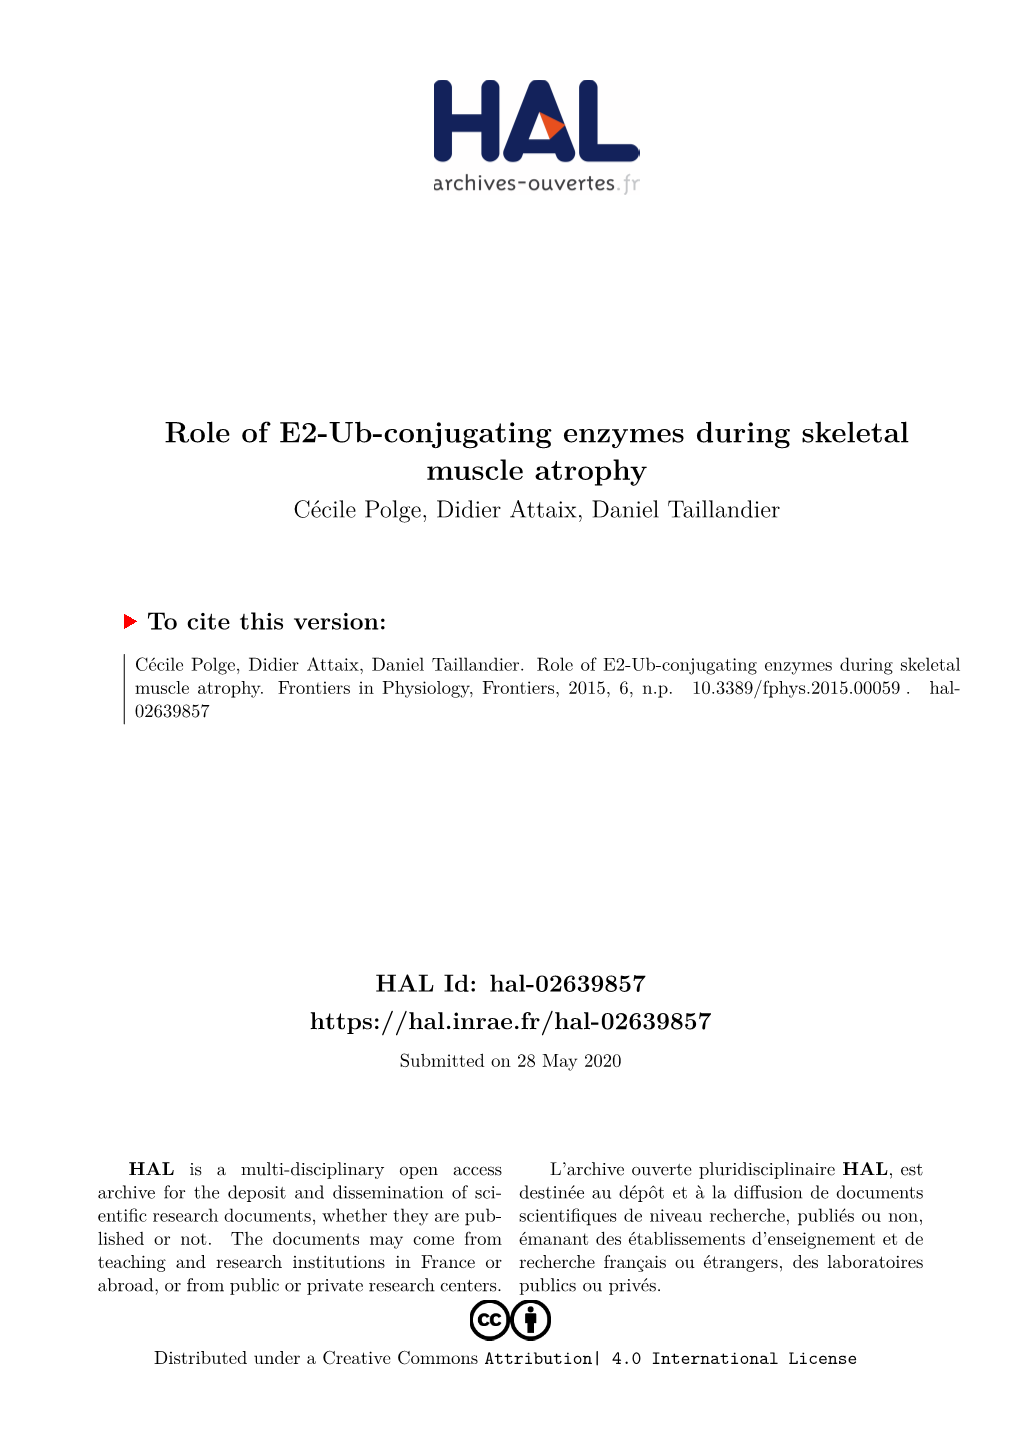 Role of E2-Ub-Conjugating Enzymes During Skeletal Muscle Atrophy Cécile Polge, Didier Attaix, Daniel Taillandier